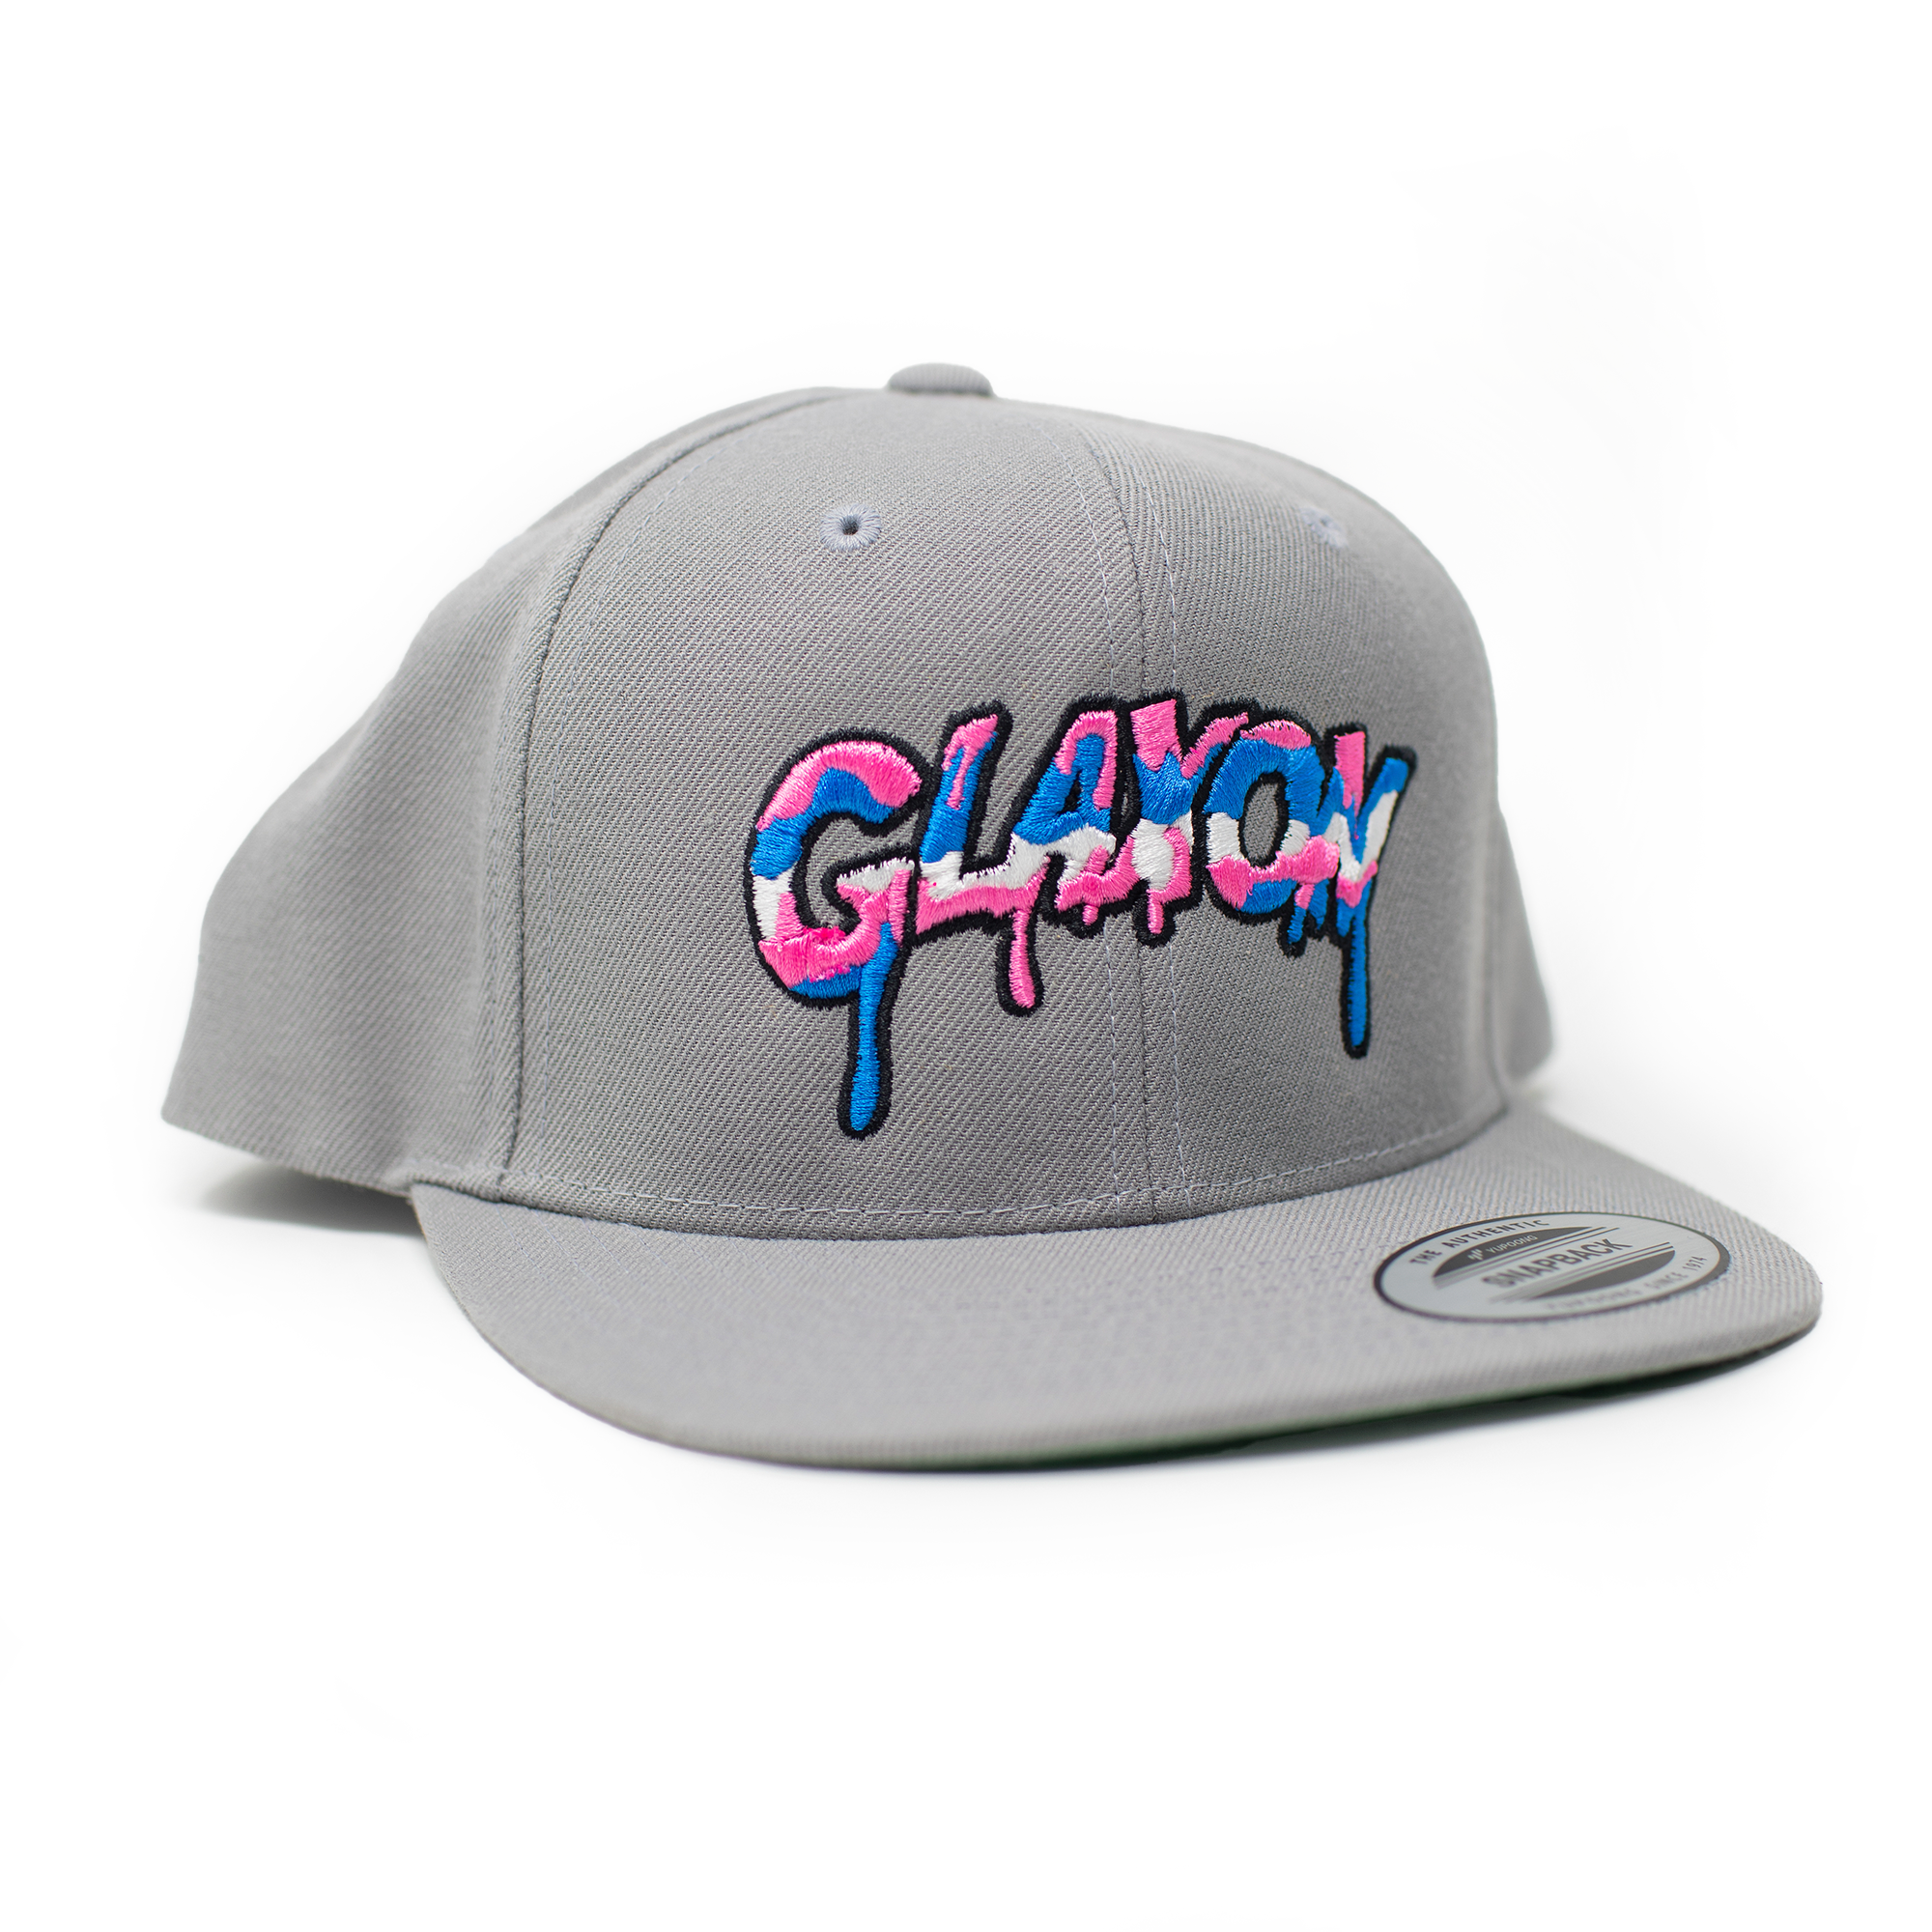 Glaxon® Drip Snapback (Limited Edition)